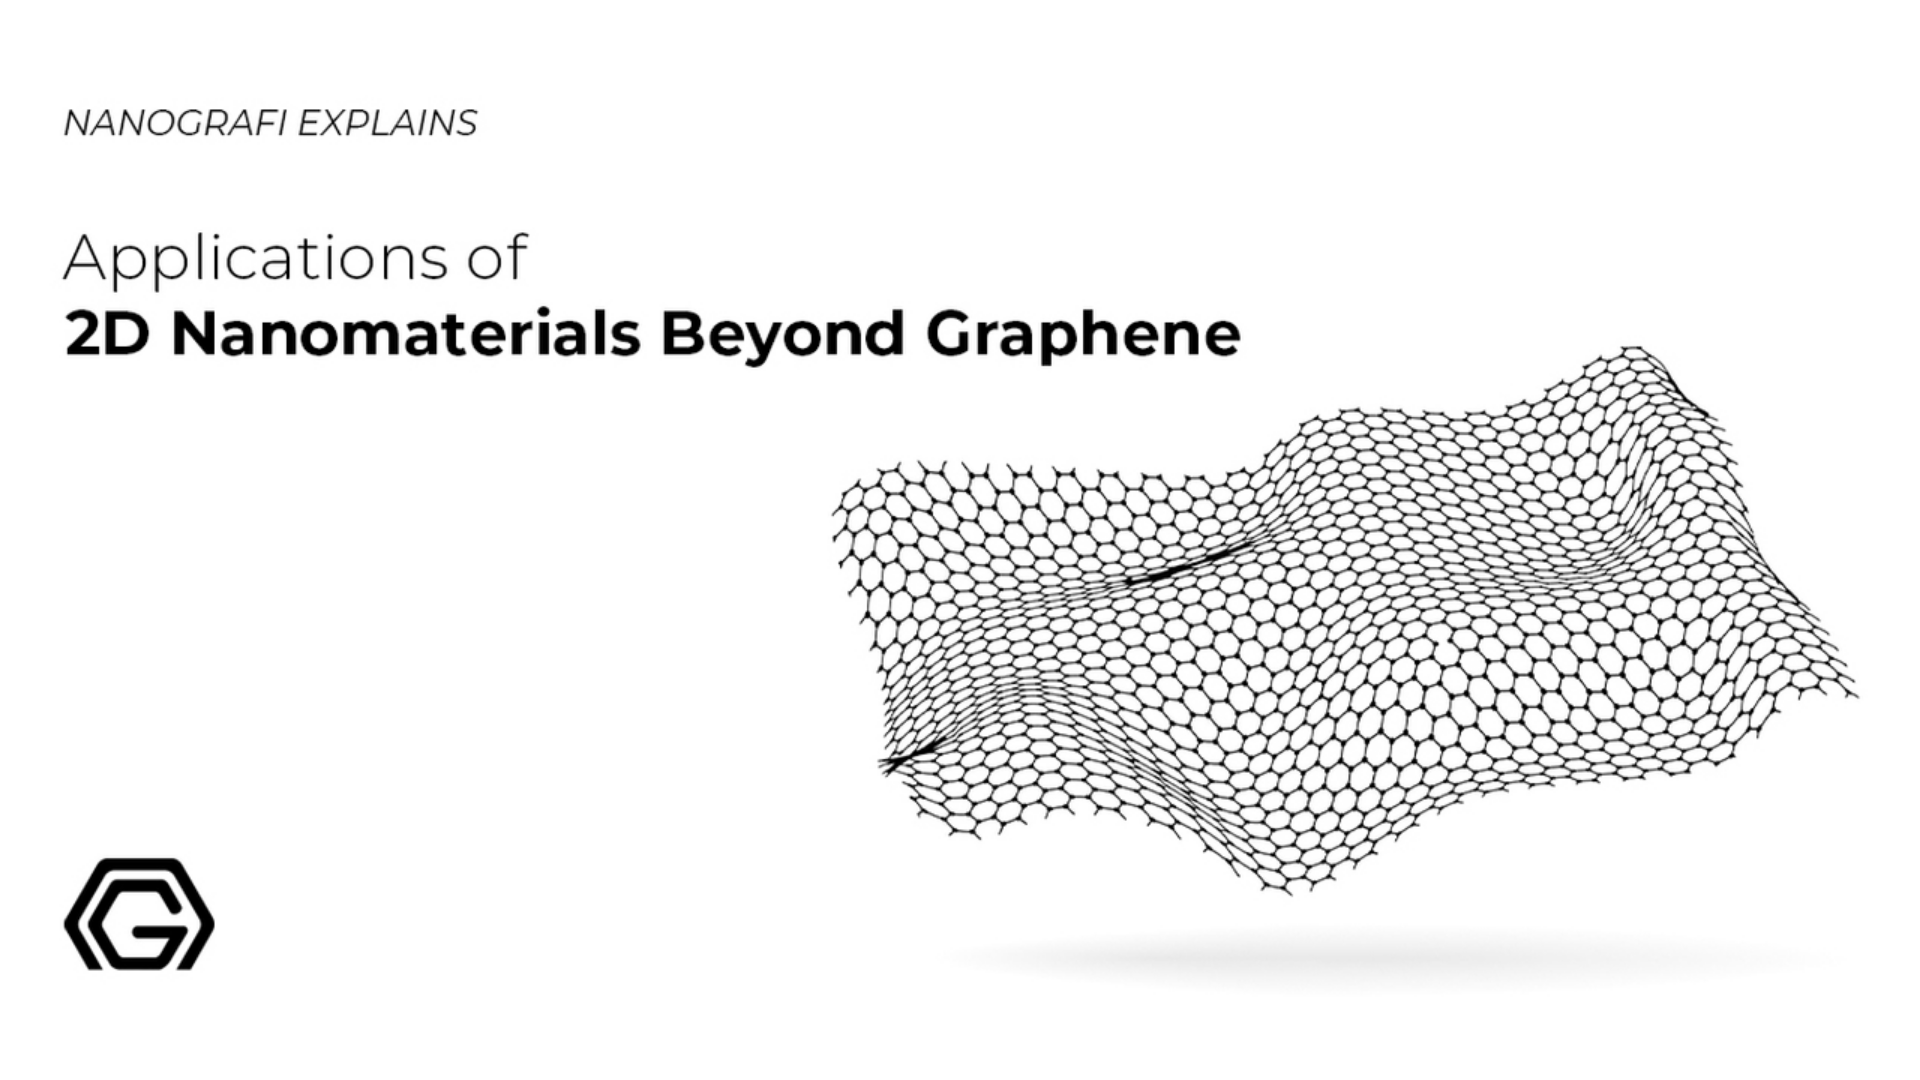 Applications of 2D nanomaterials beyond graphene